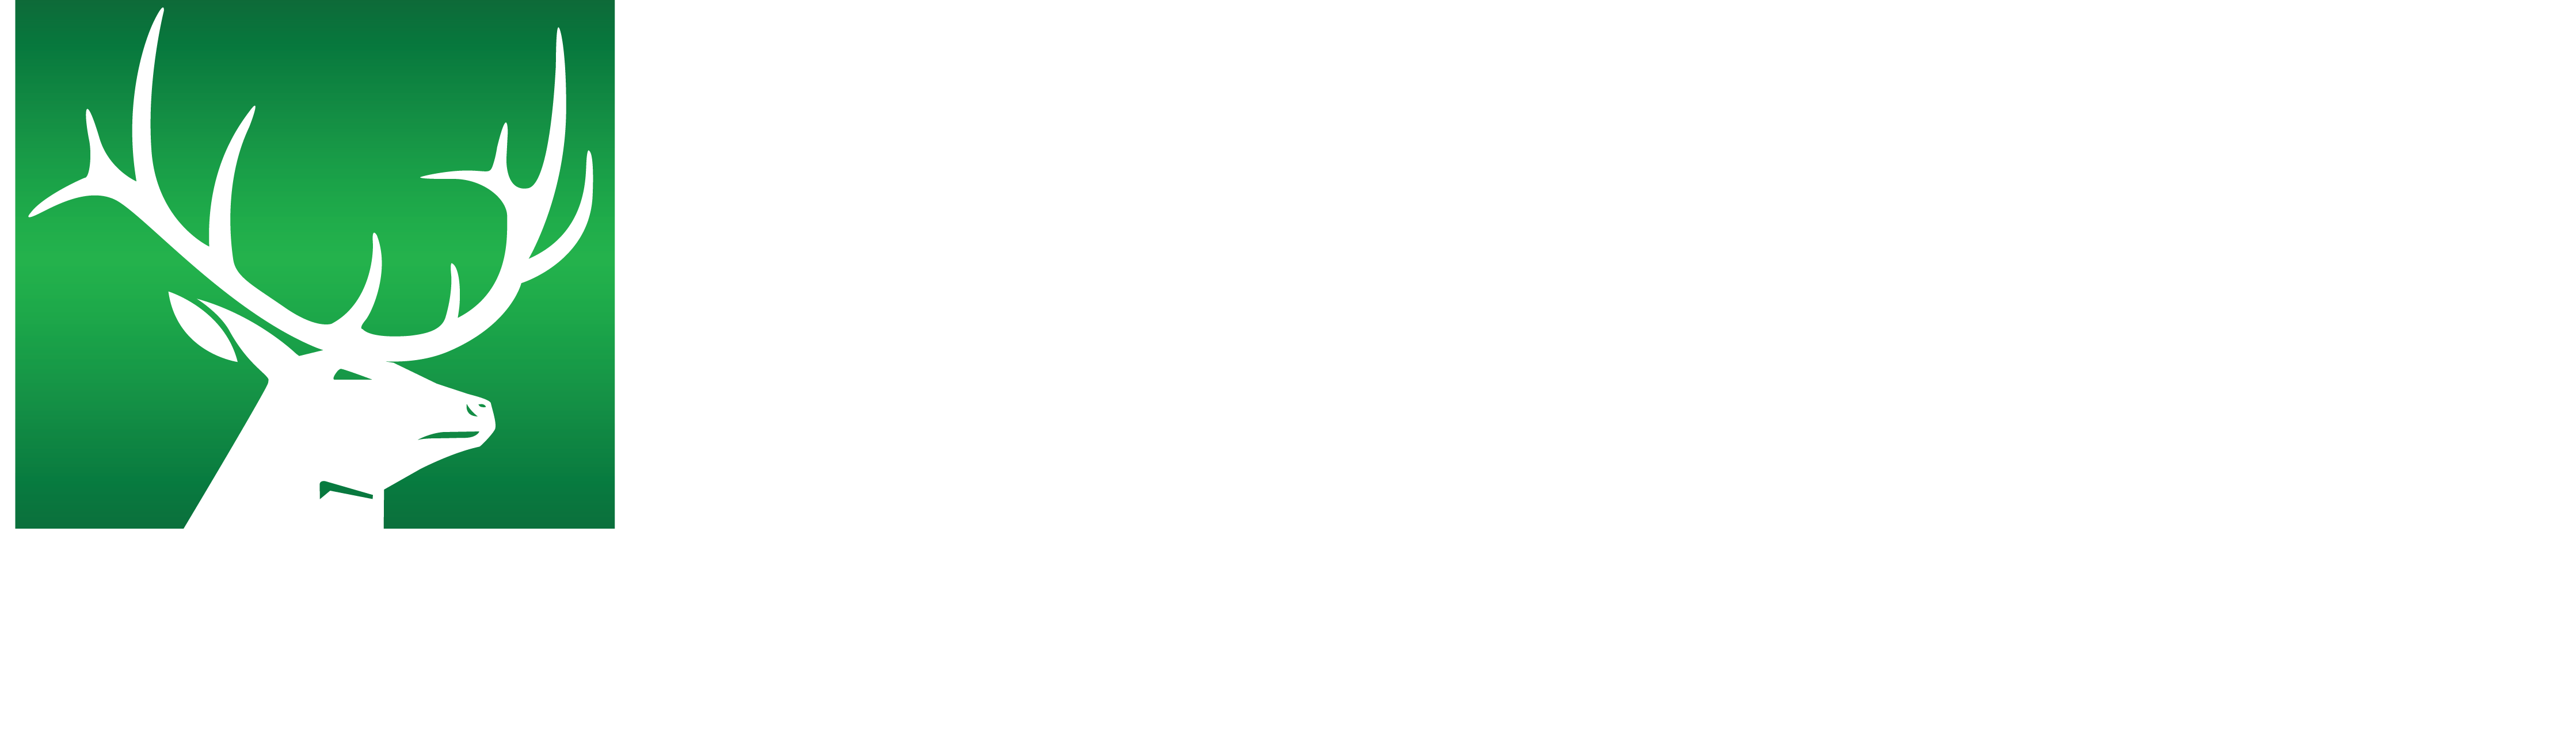 ELK Roofing • Solar • Exteriors - Denver Roofers